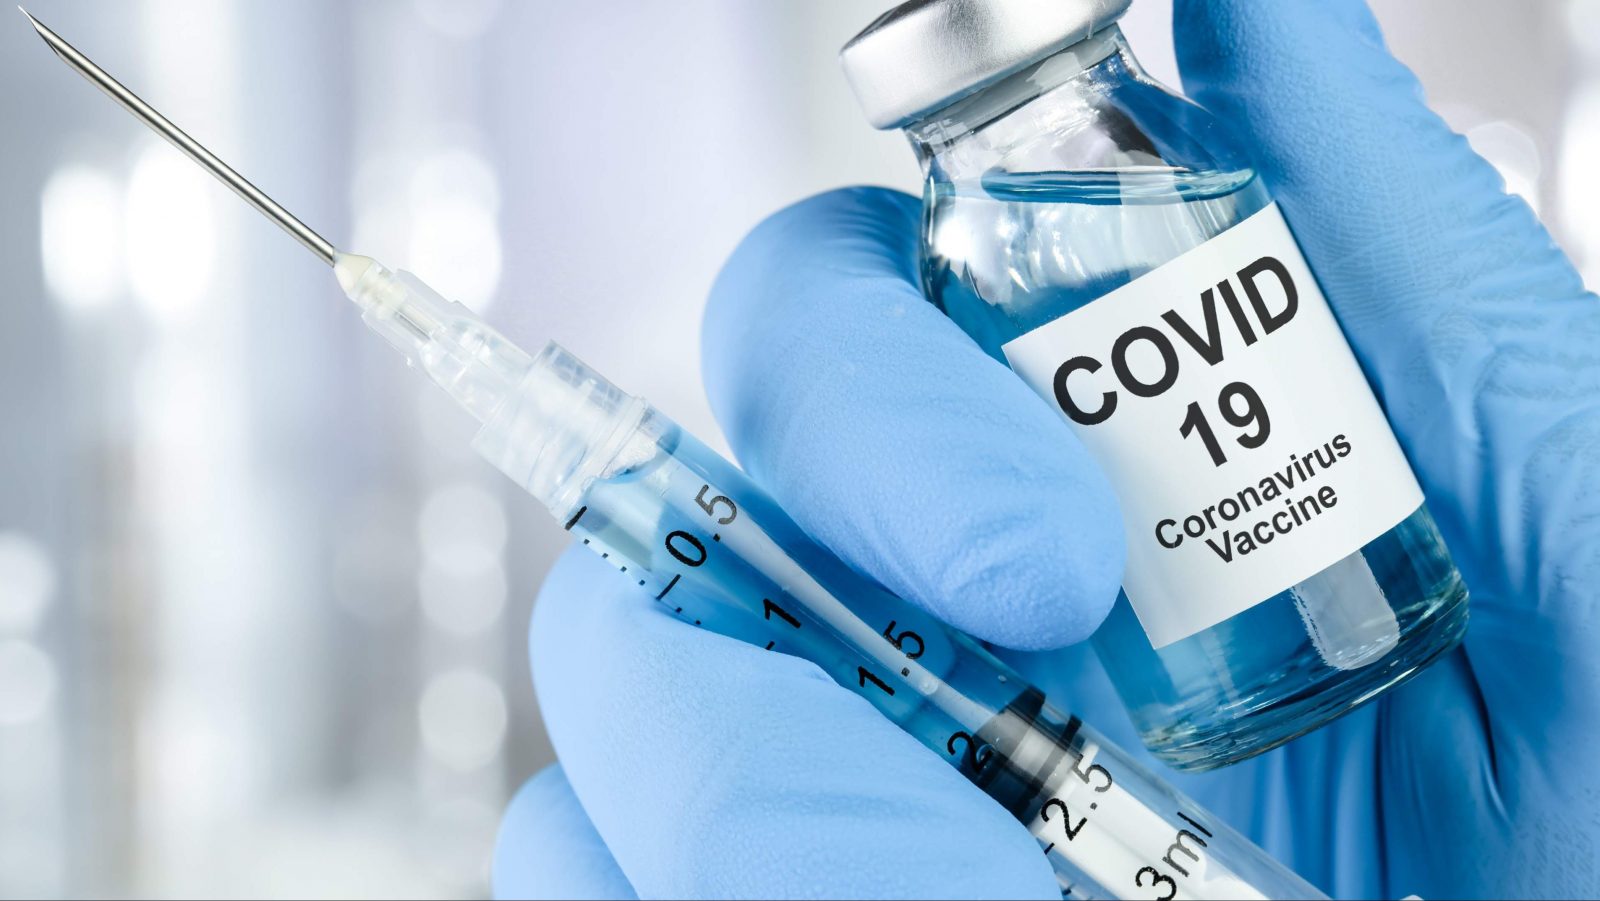 fiala e siringa per il vaccino anti covid (o coronavirus)